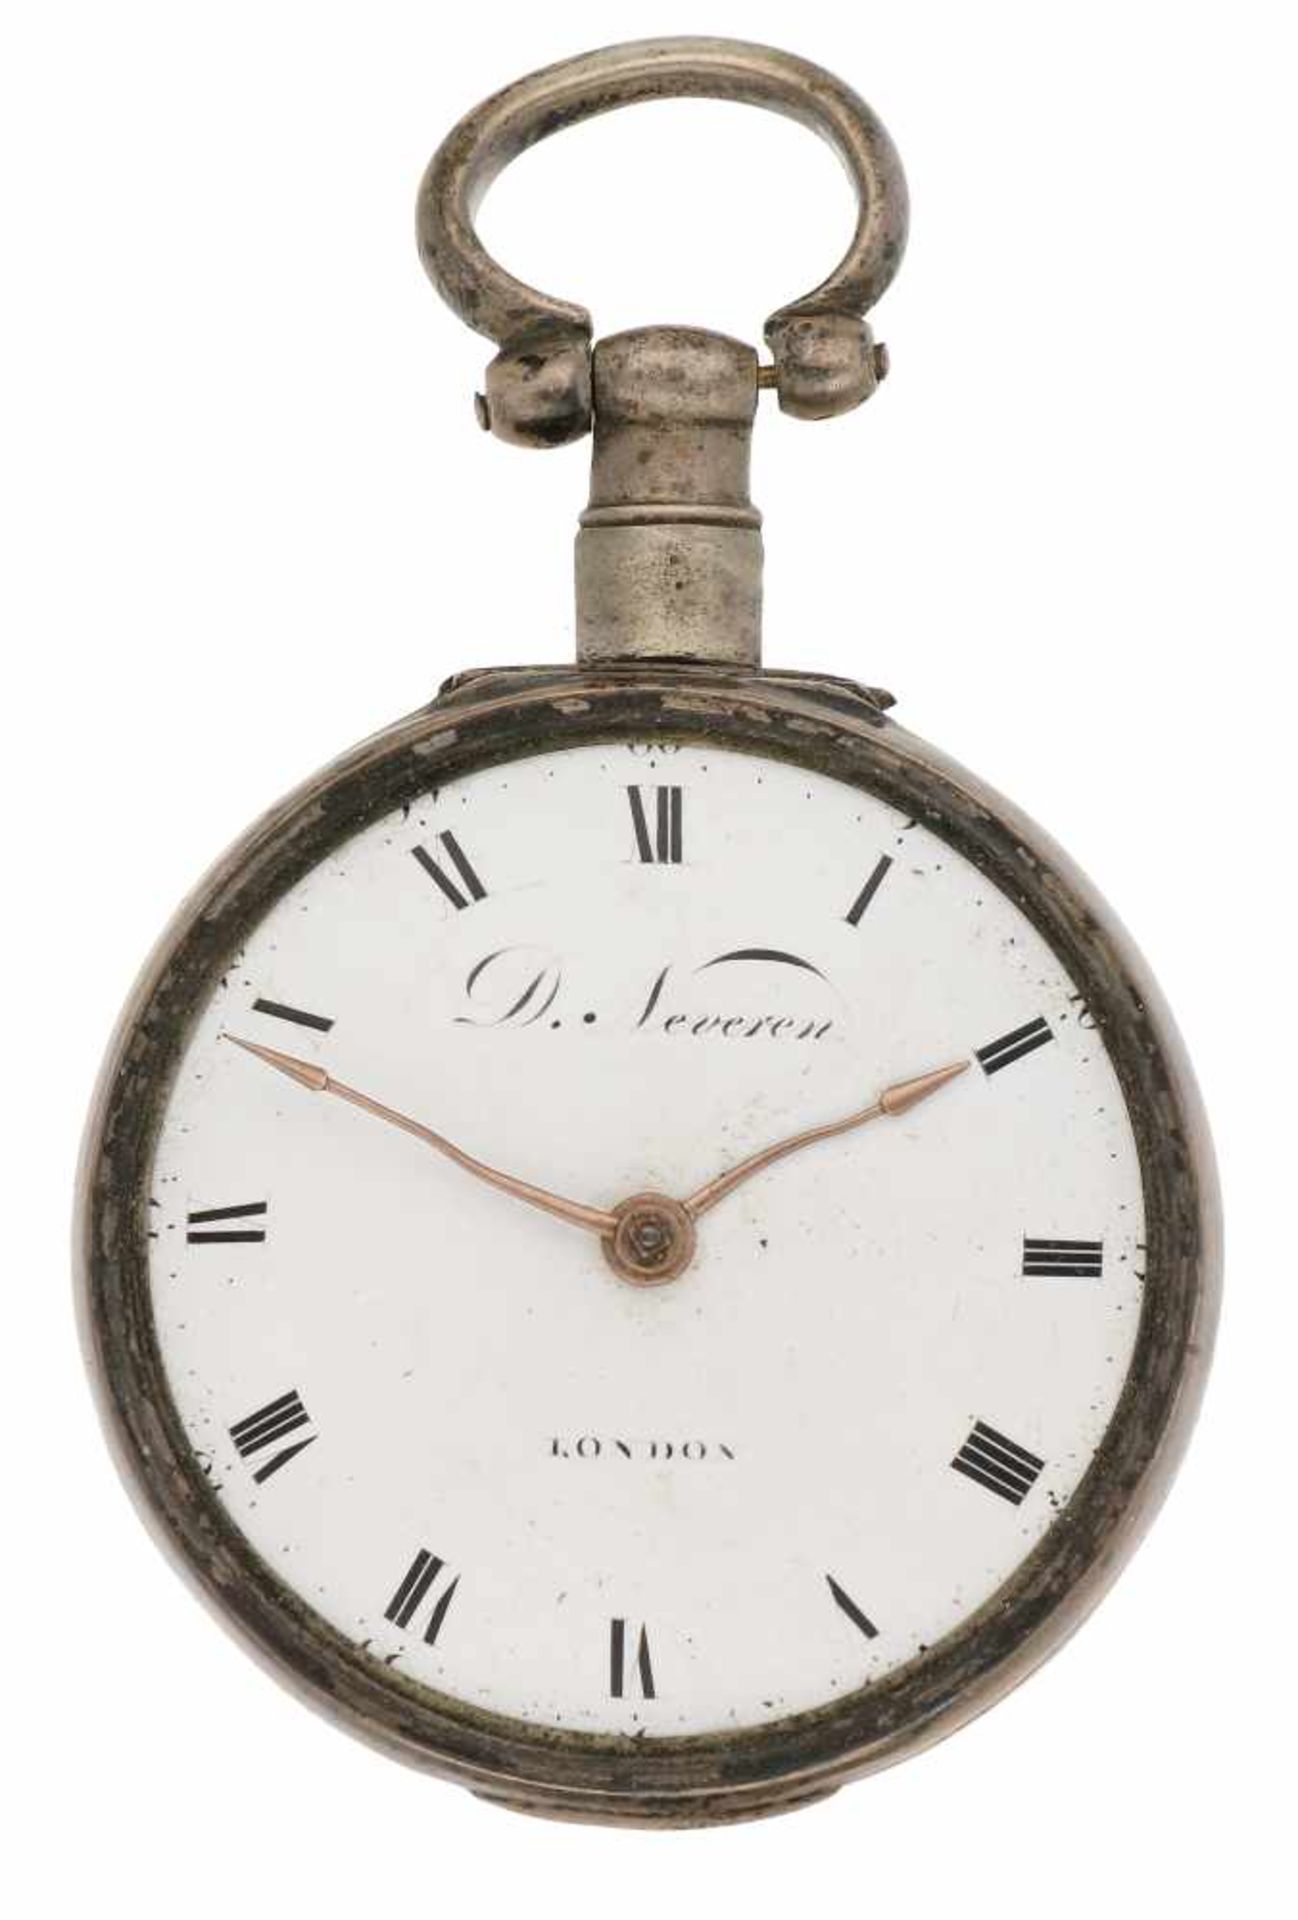 Pocket watch silver plated, verge escapement 'D.D. Neveren, London' - Men's pocket watch - Manual